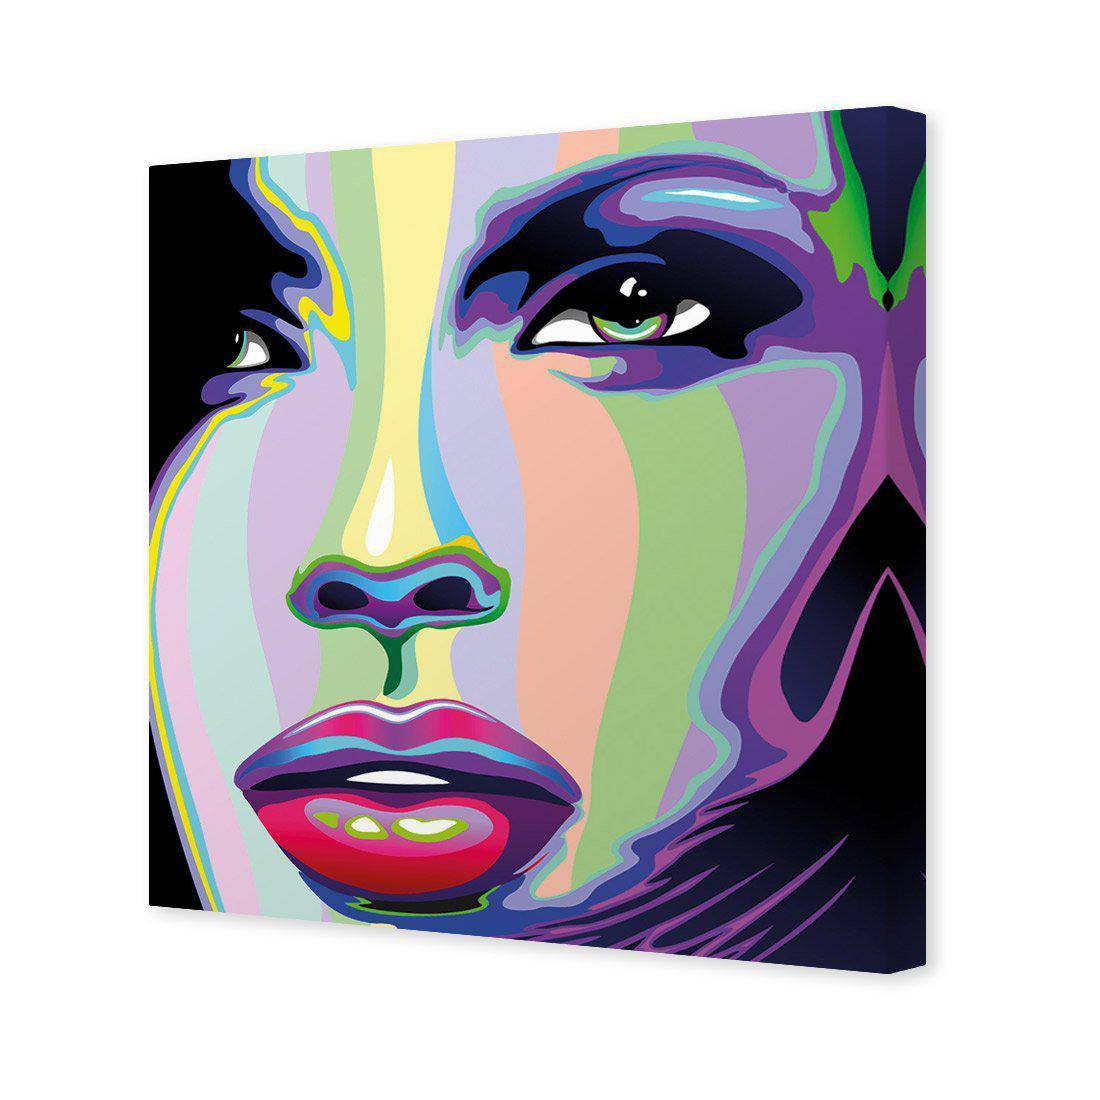 Electric Face Canvas Art-Canvas-Wall Art Designs-30x30cm-Canvas - No Frame-Wall Art Designs